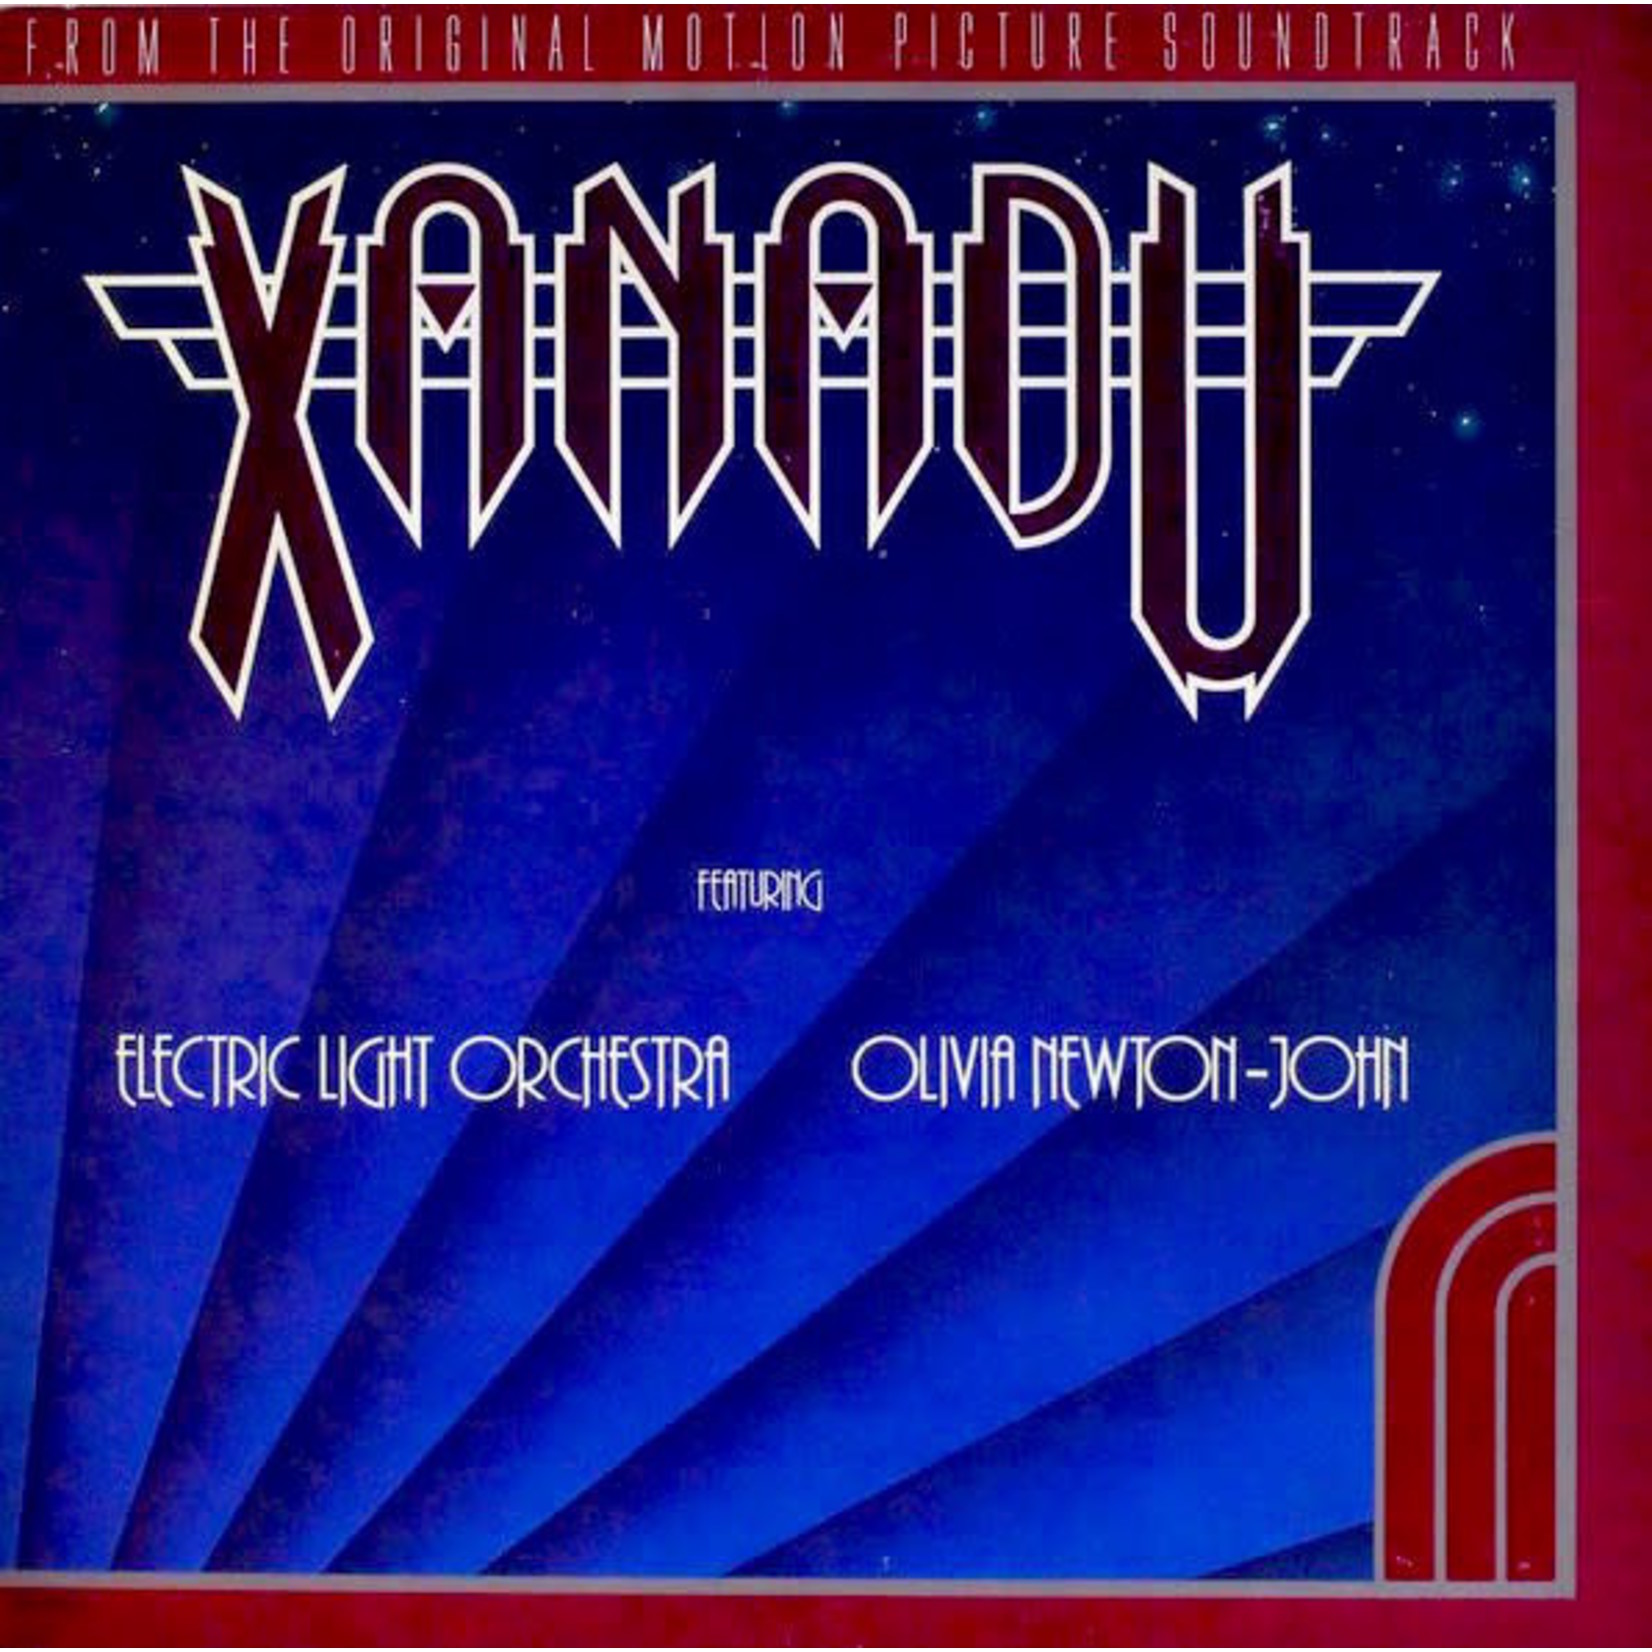 [Vintage] Olivia Newton-John & Electric Light Orchestra - Xanadu (soundtrack)